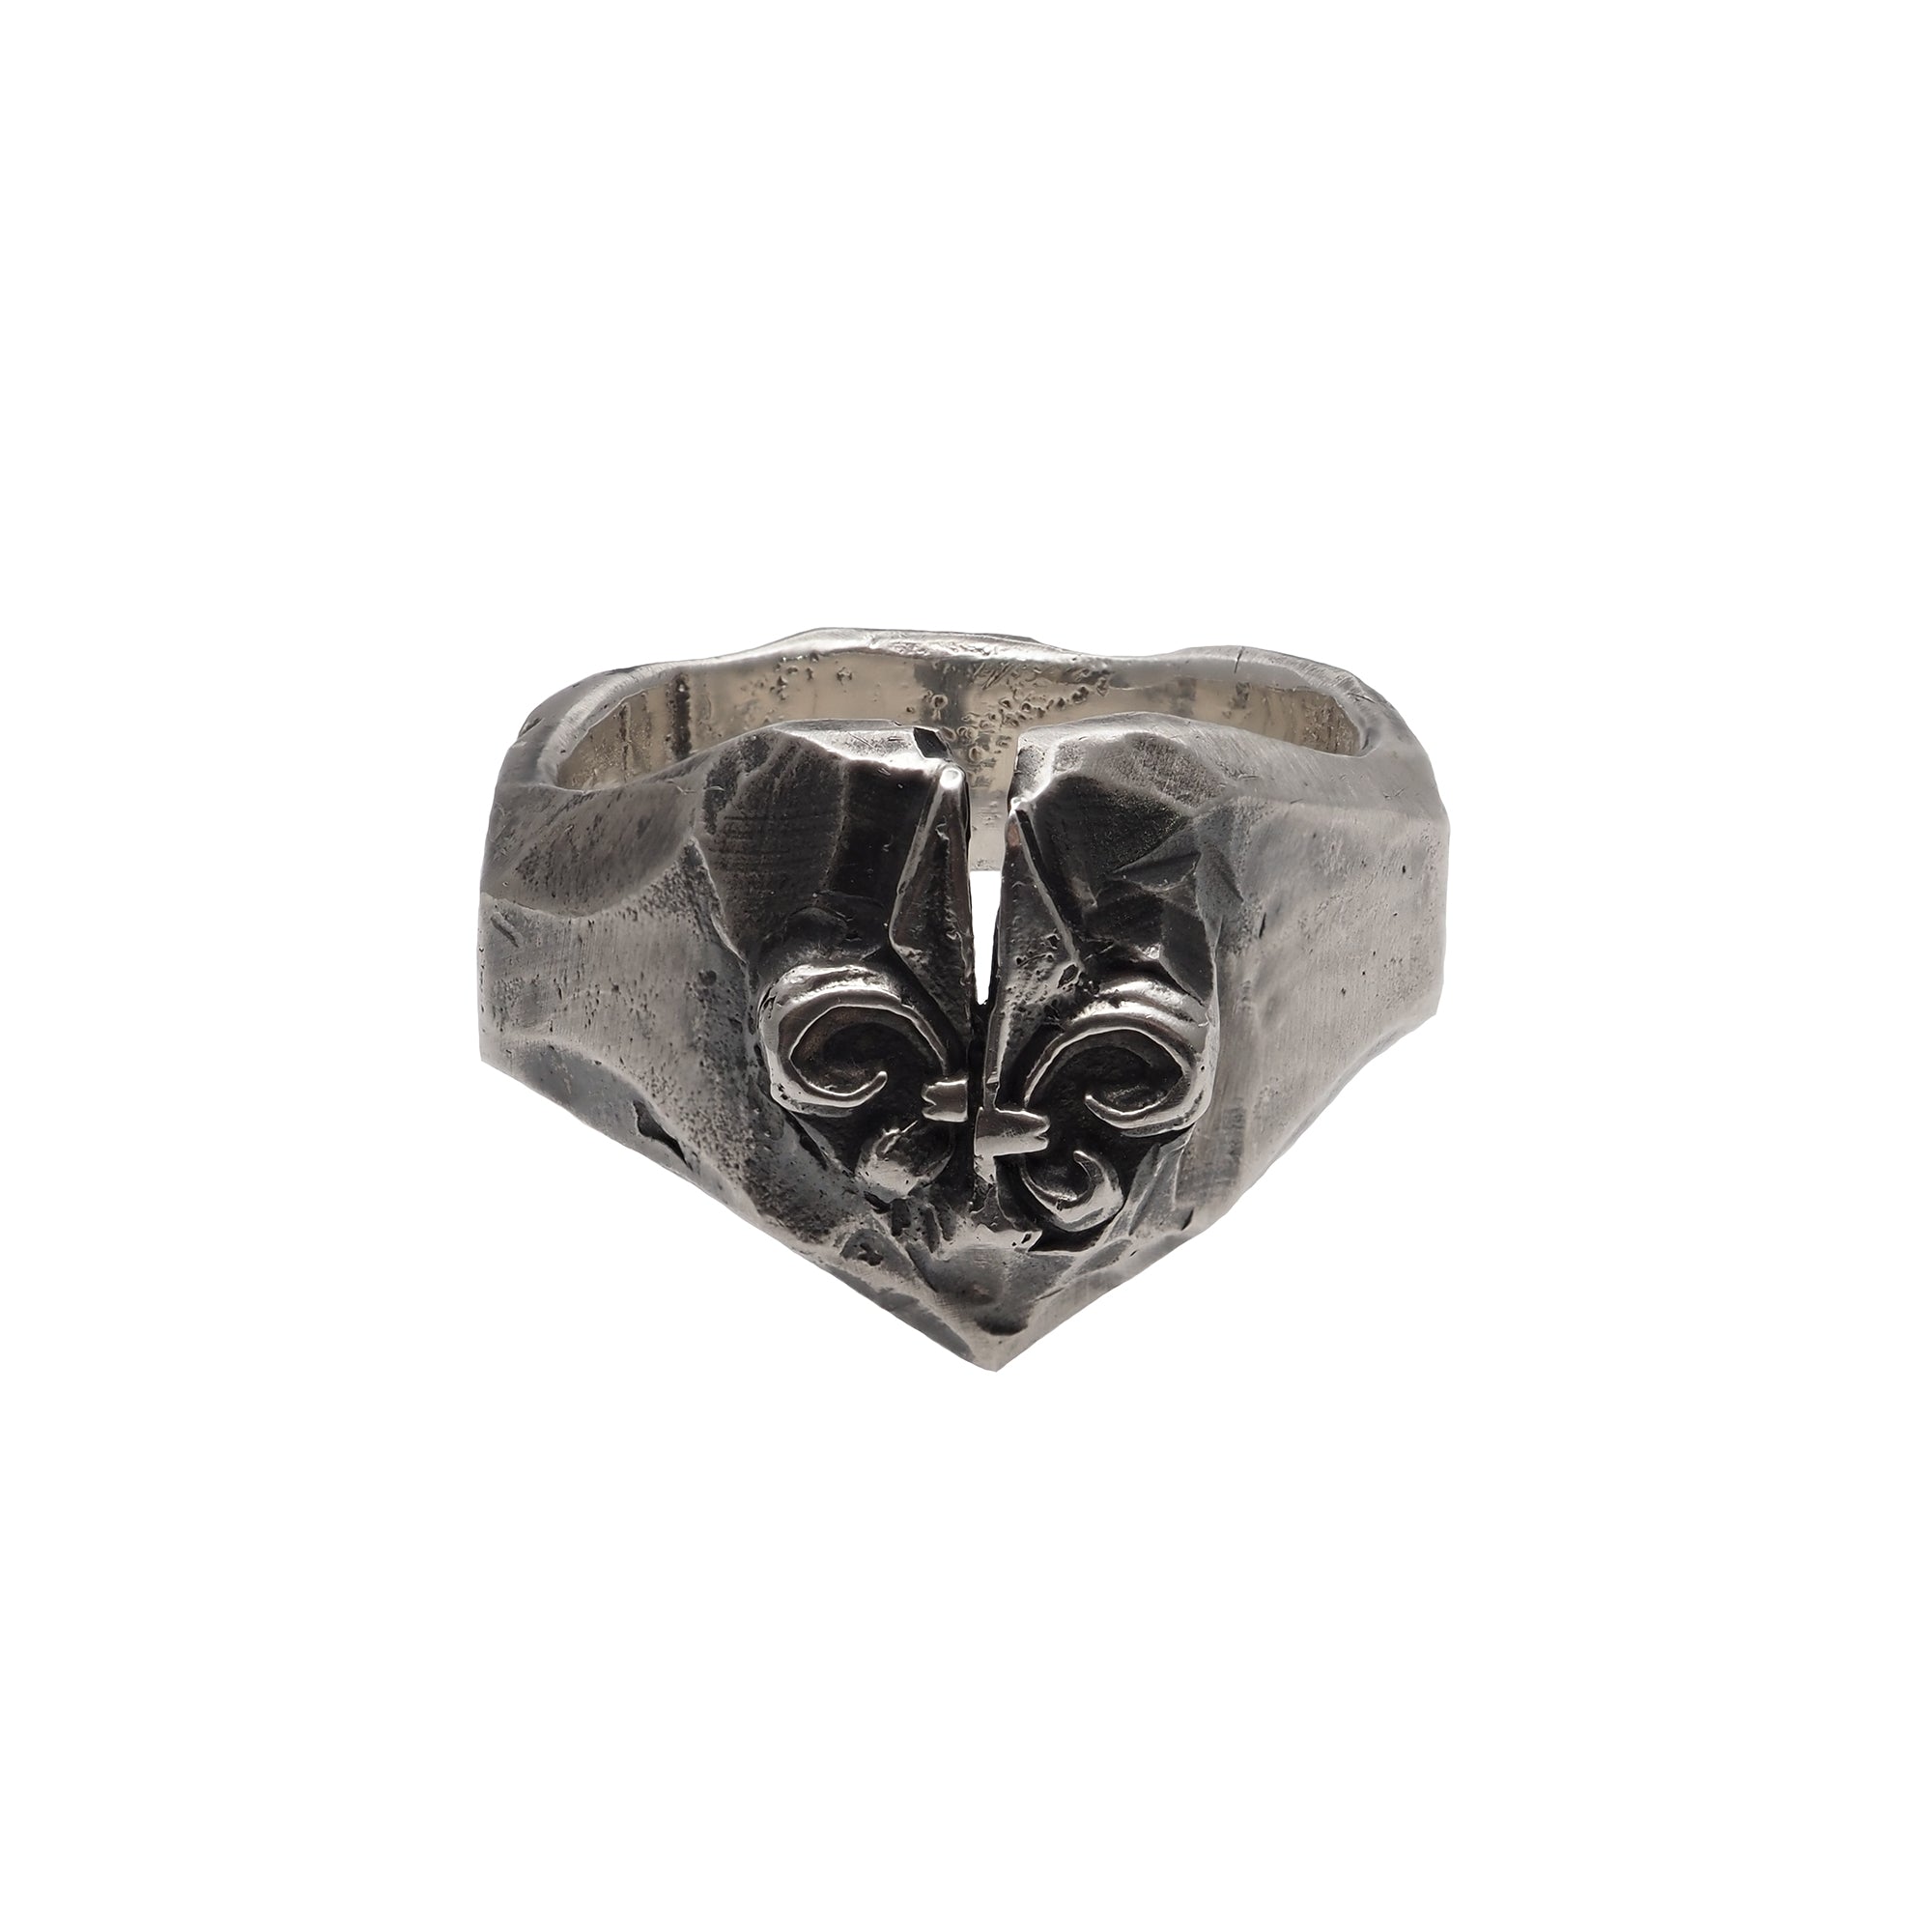 King Arthur's Knight Silver Signet Ring features a fleur-de-lis on